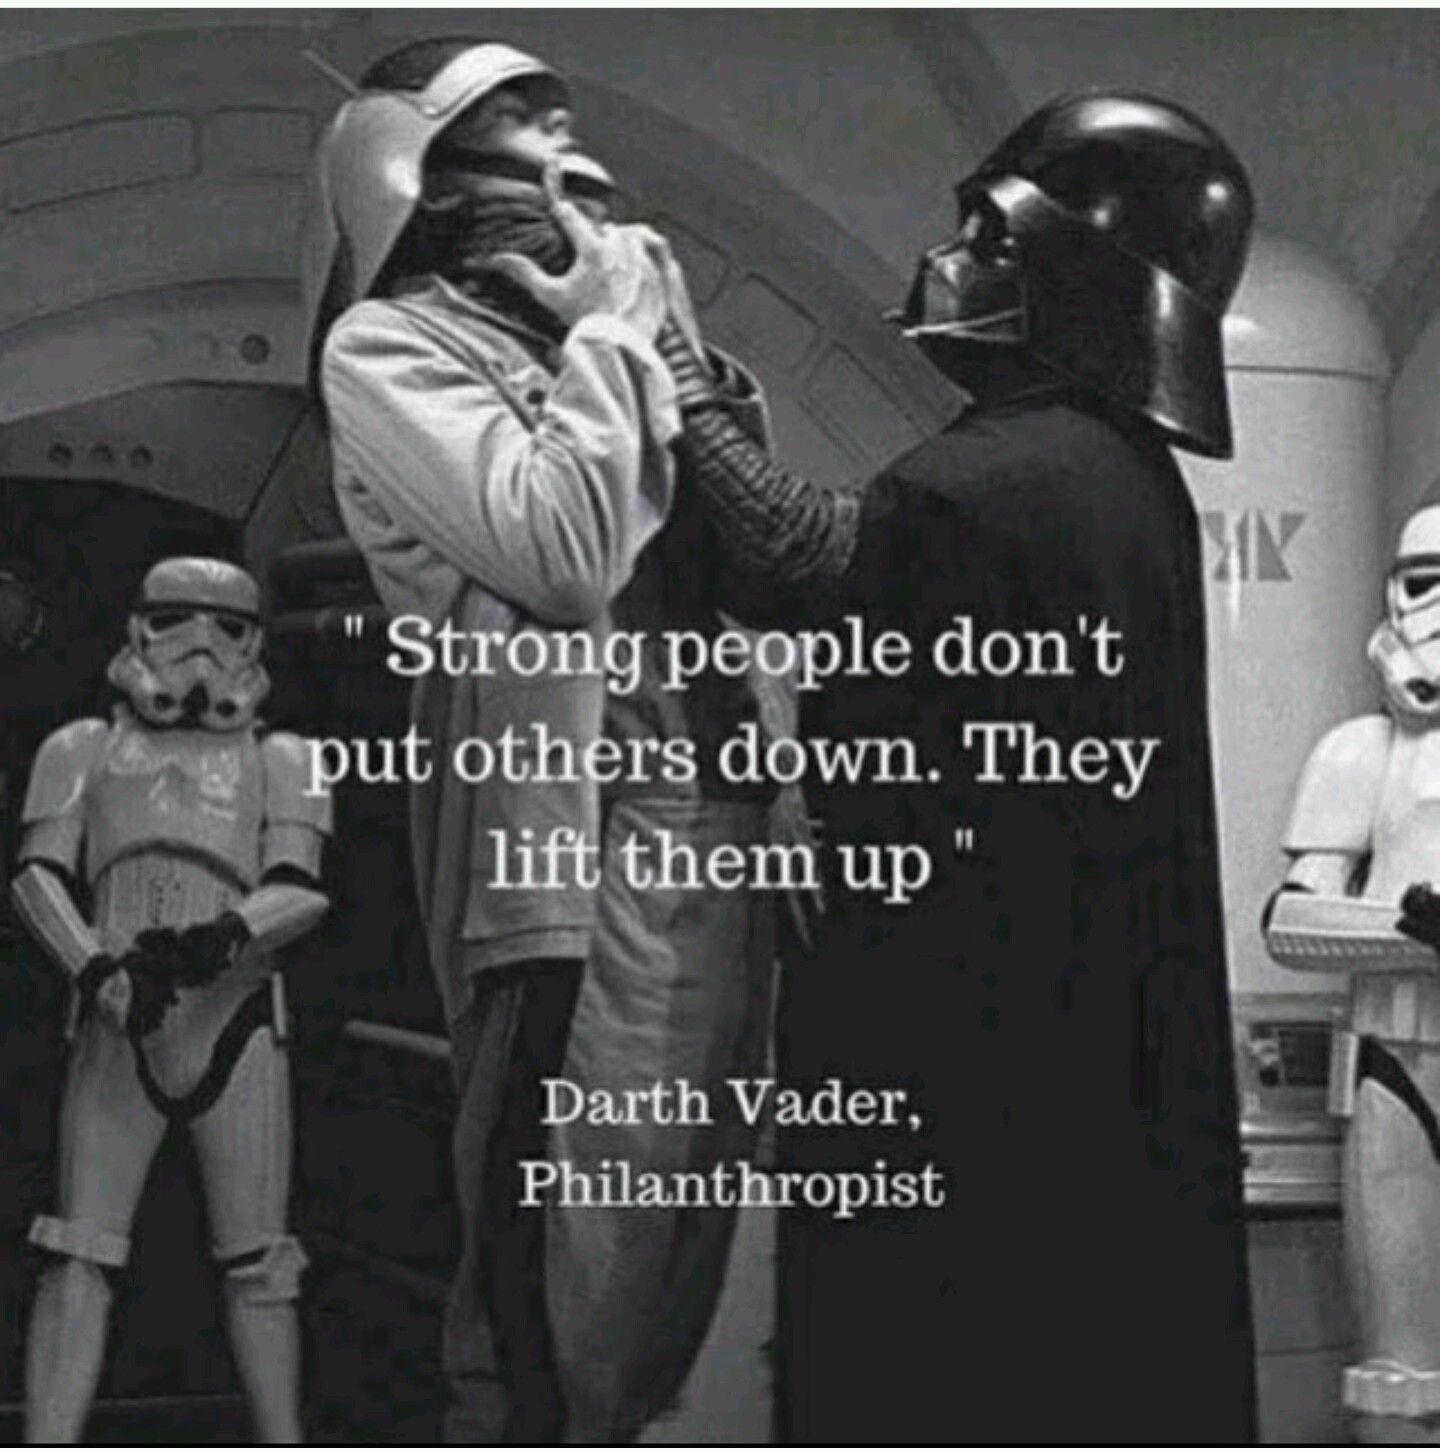 Darth Vader as a philanthropist